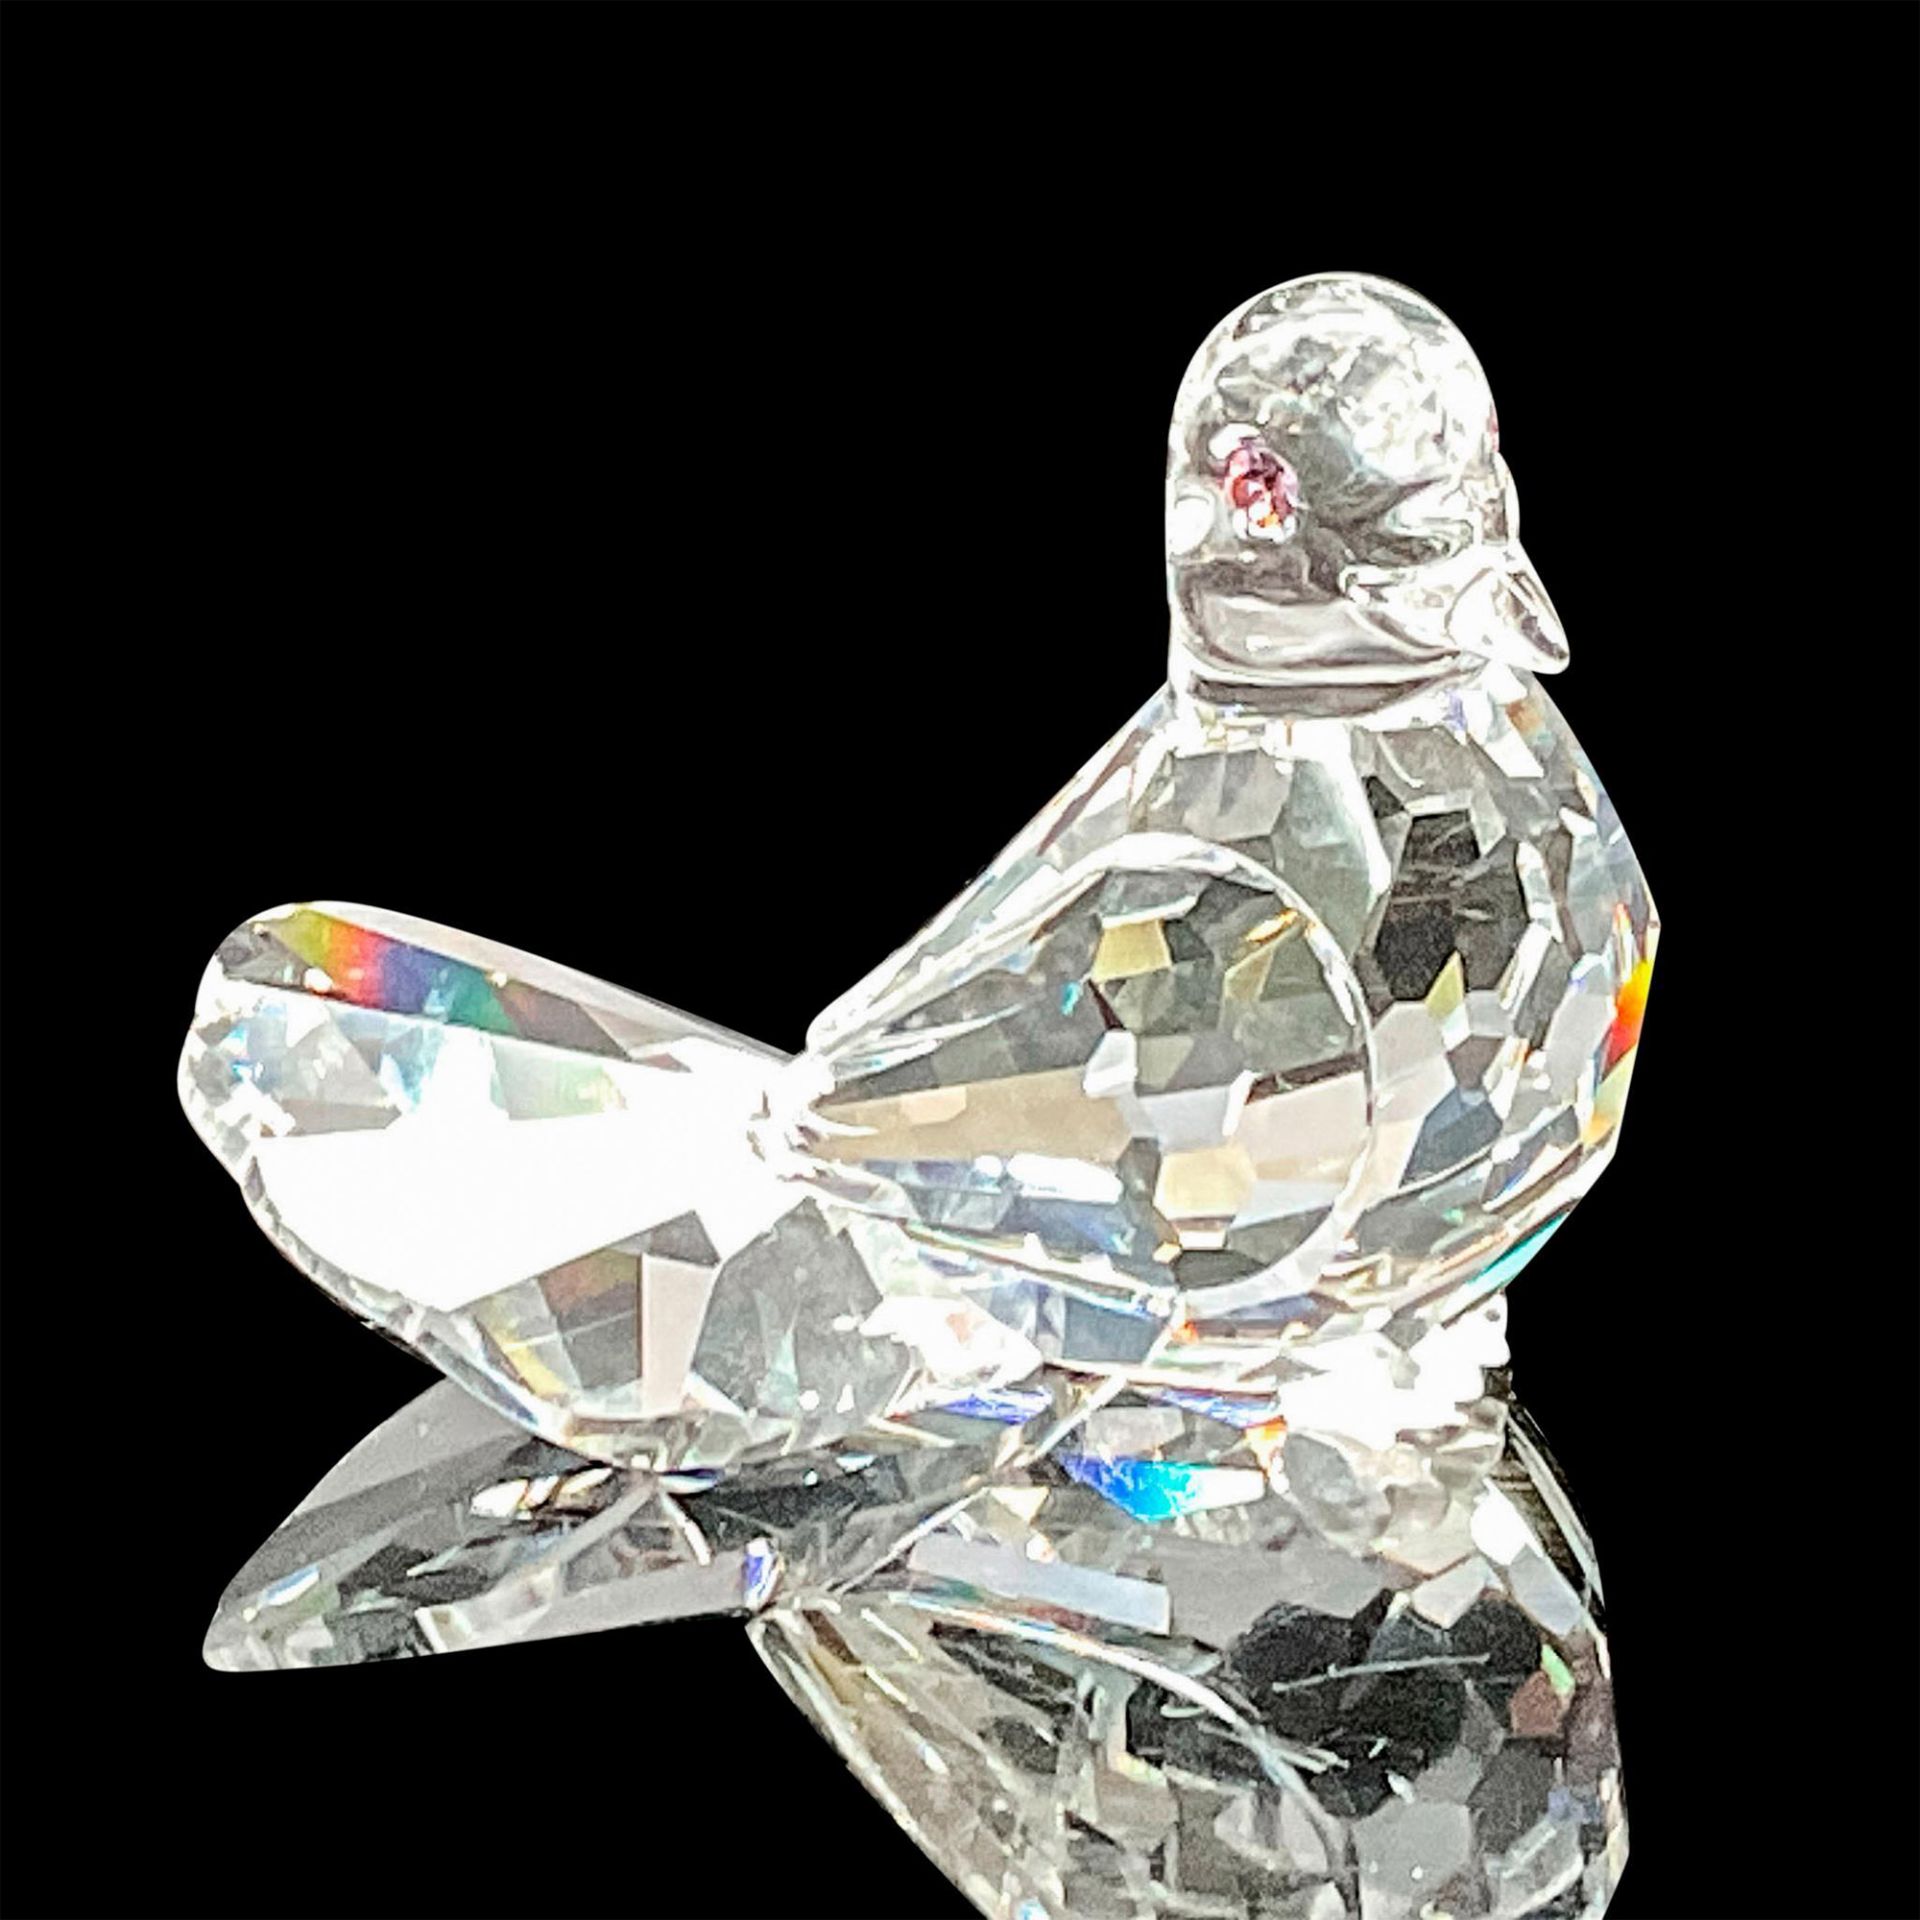 Swarovski Silver Crystal Figurine, Dove